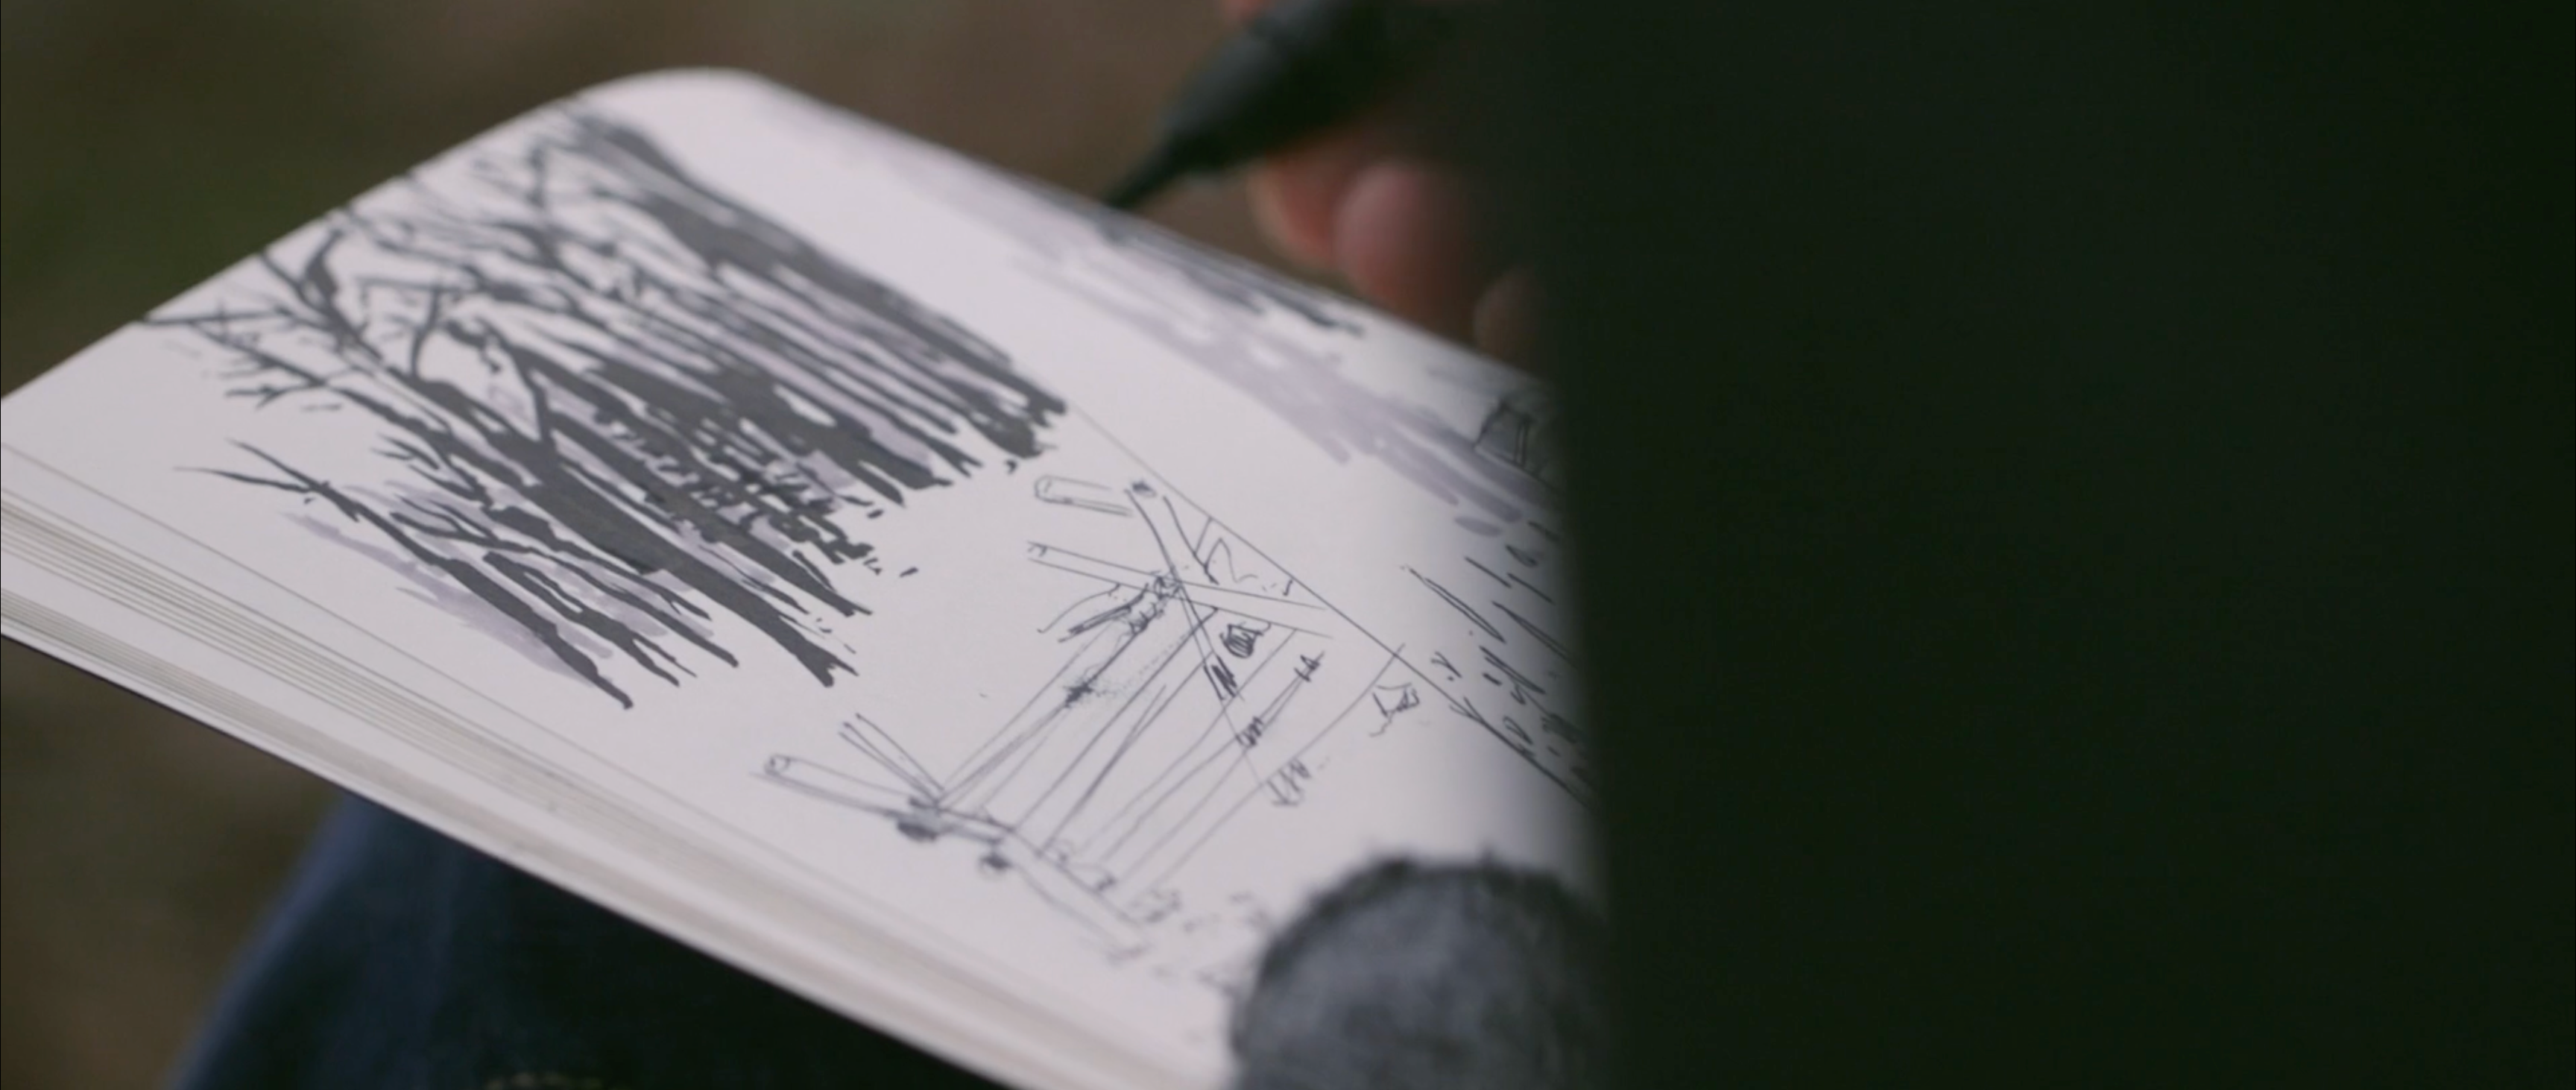 Jared Boggess drawing in a sketchbook